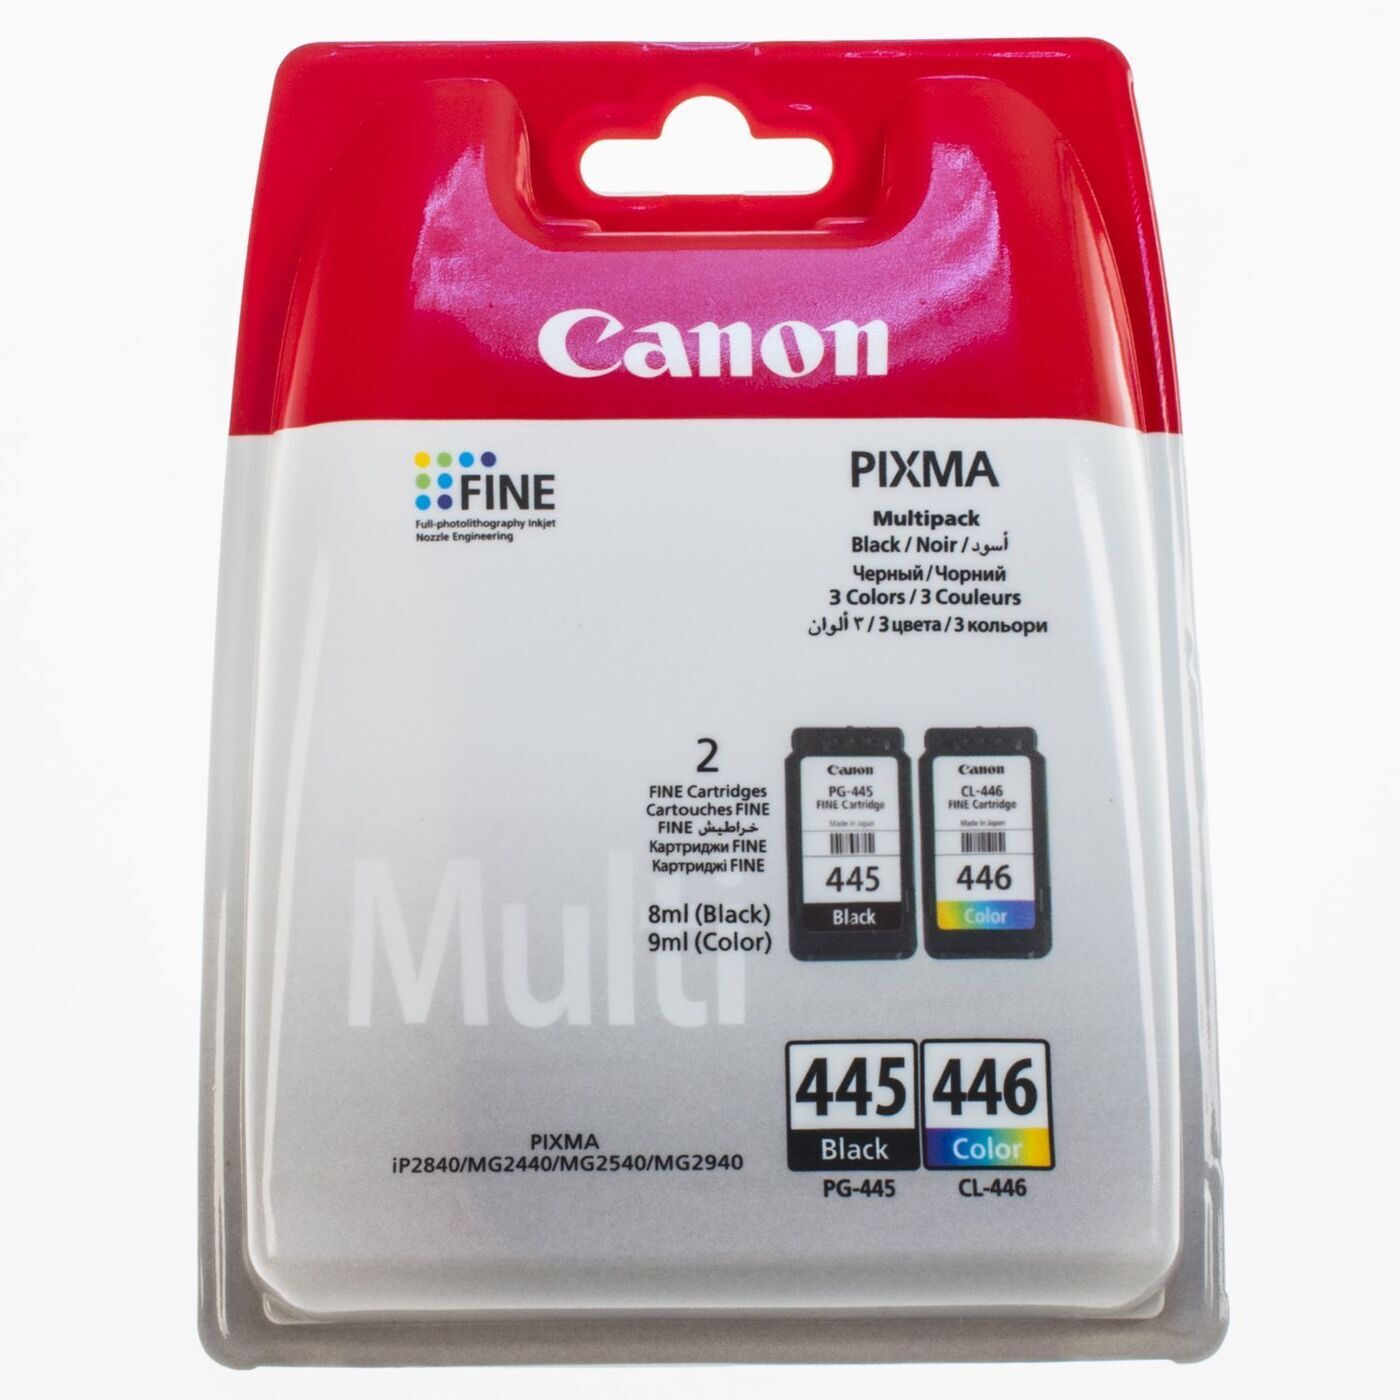 Картриджи canon pixma mg. Картридж для принтера Canon PIXMA 446. Картридж Canon PG-445 для mg2540. Принтер Canon PIXMA PG-445. Картридж Canon PG-445/CL-446.